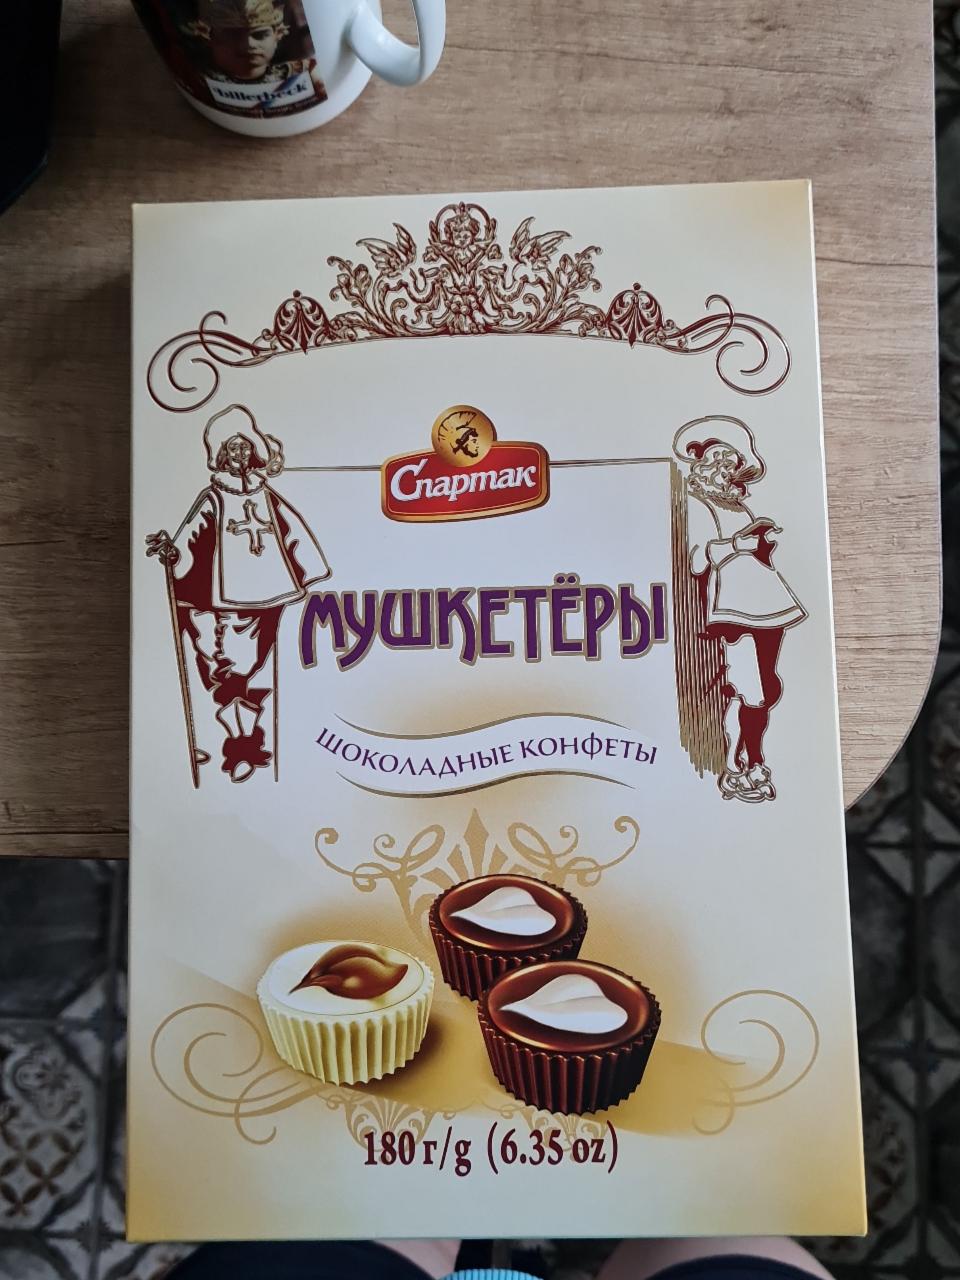 Фото - Шоколадные конфеты Мушкетёры Спартак